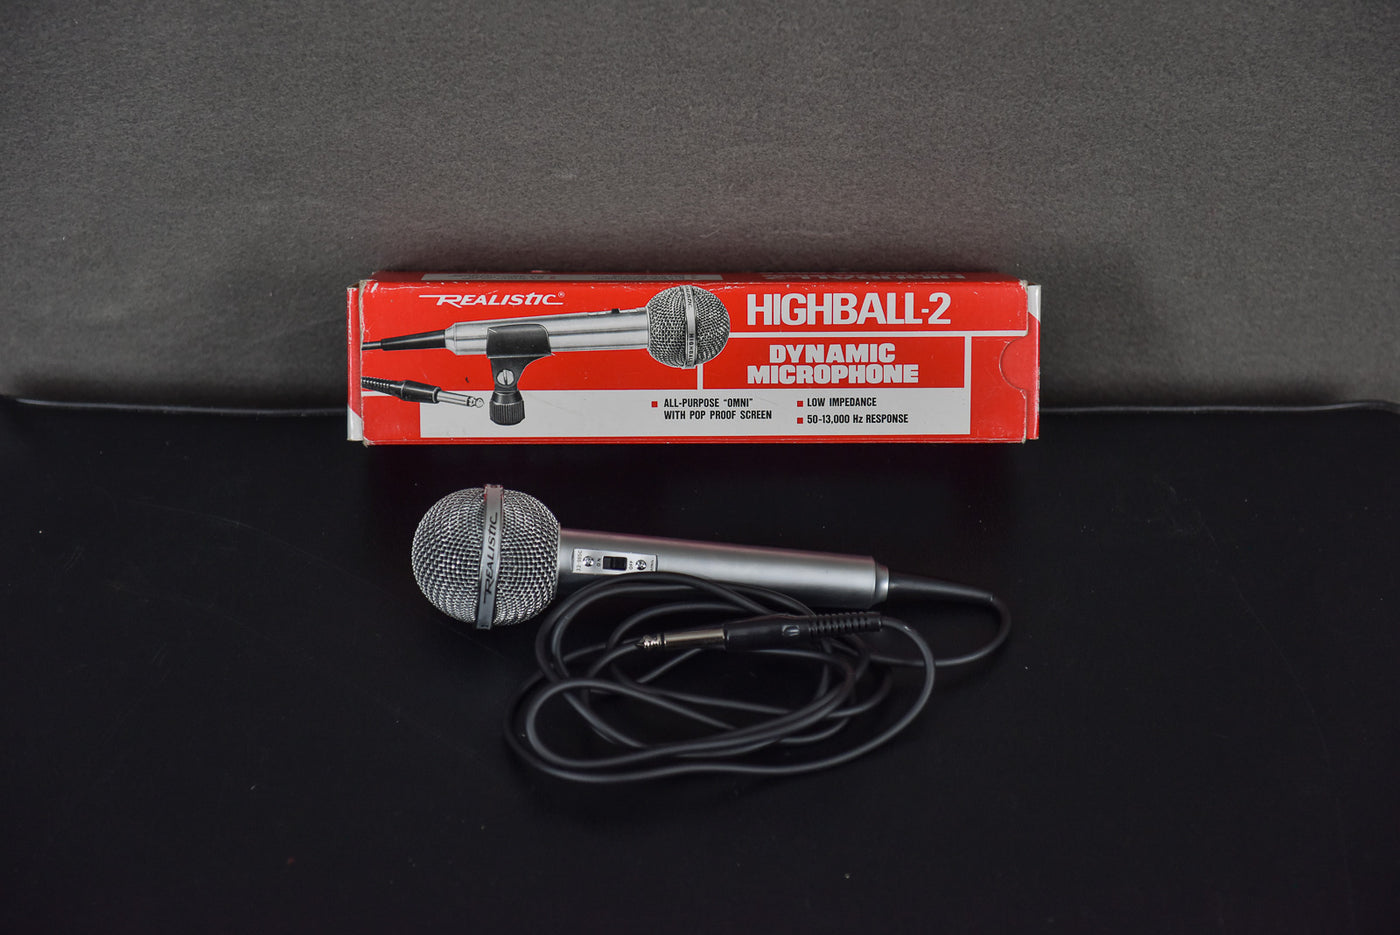 Highball-2 Dynamic Microphone